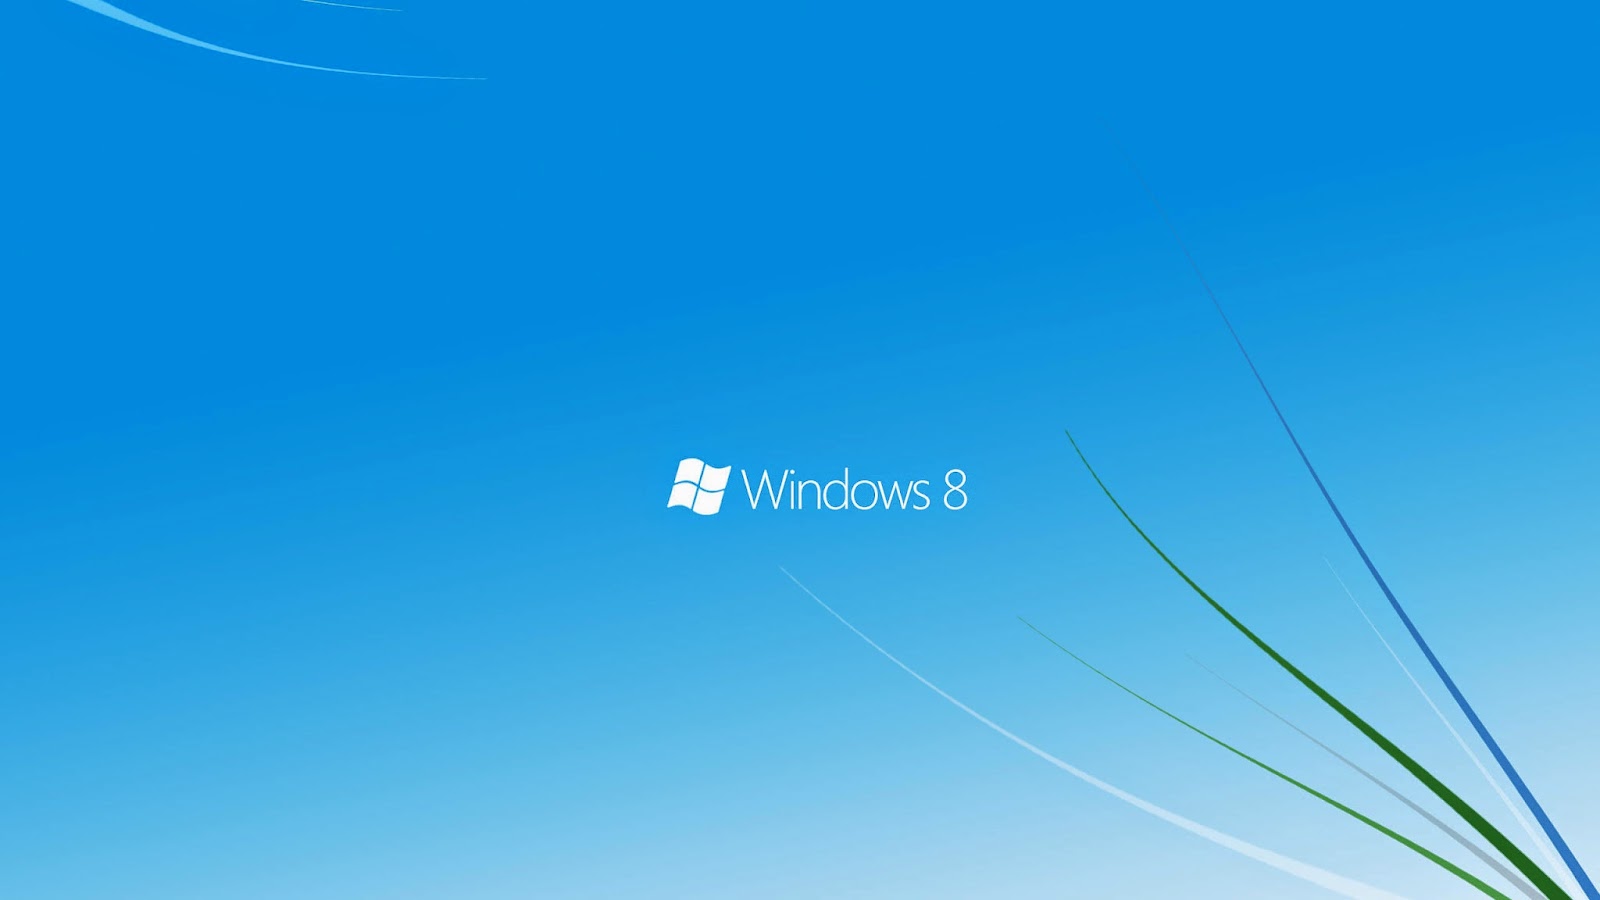 Latest Windows 8 full HD wallpaper new Metro look blue black theme BG 1600x900